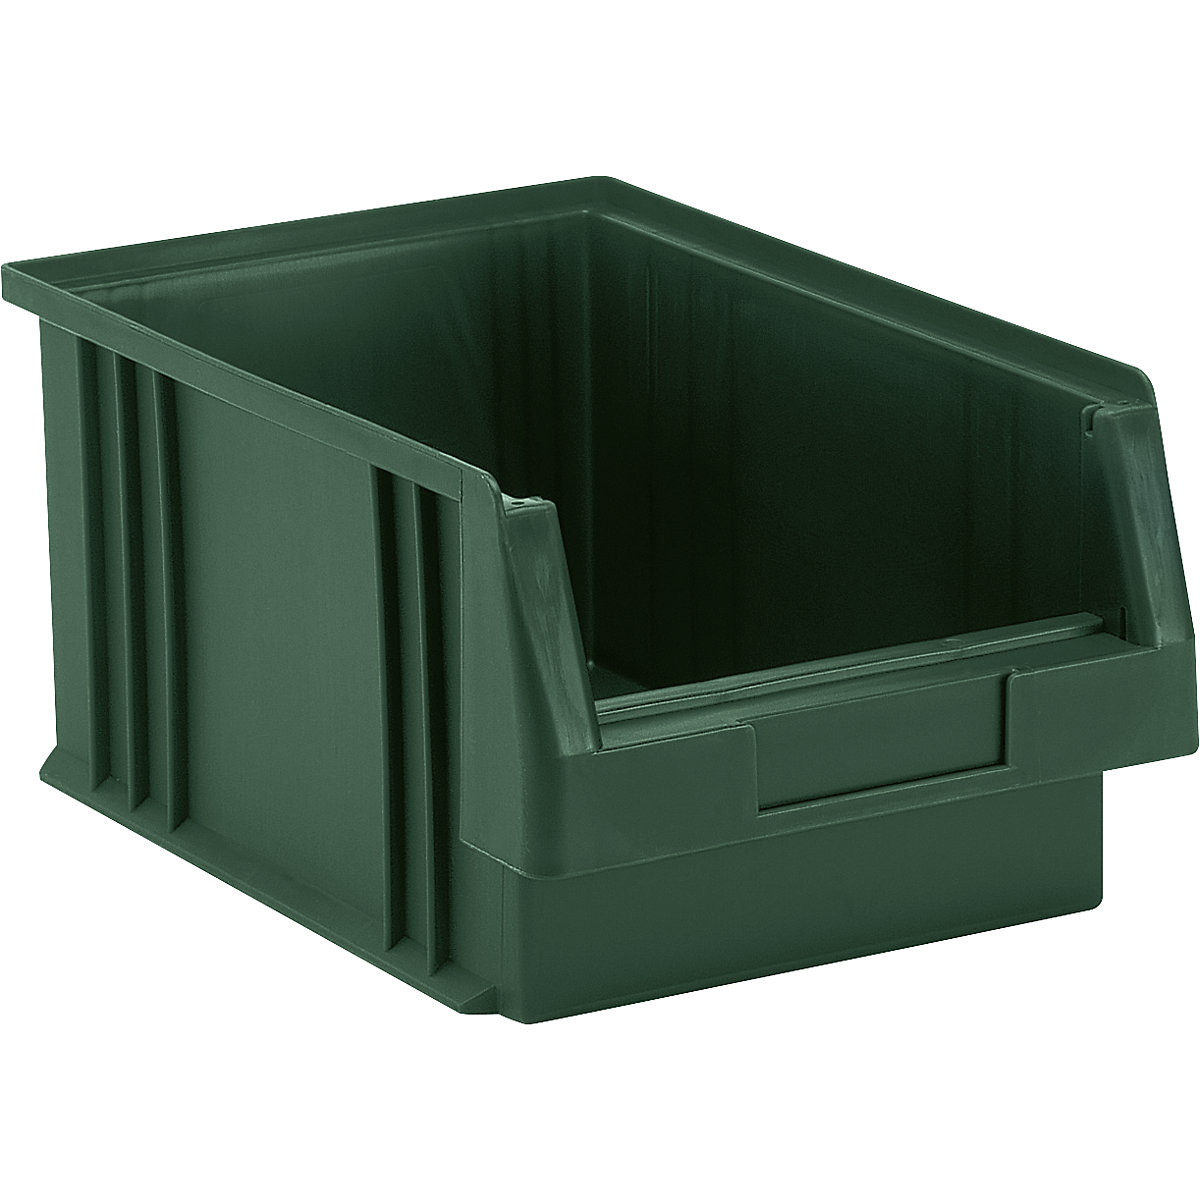 Open fronted storage bin made of polypropylene